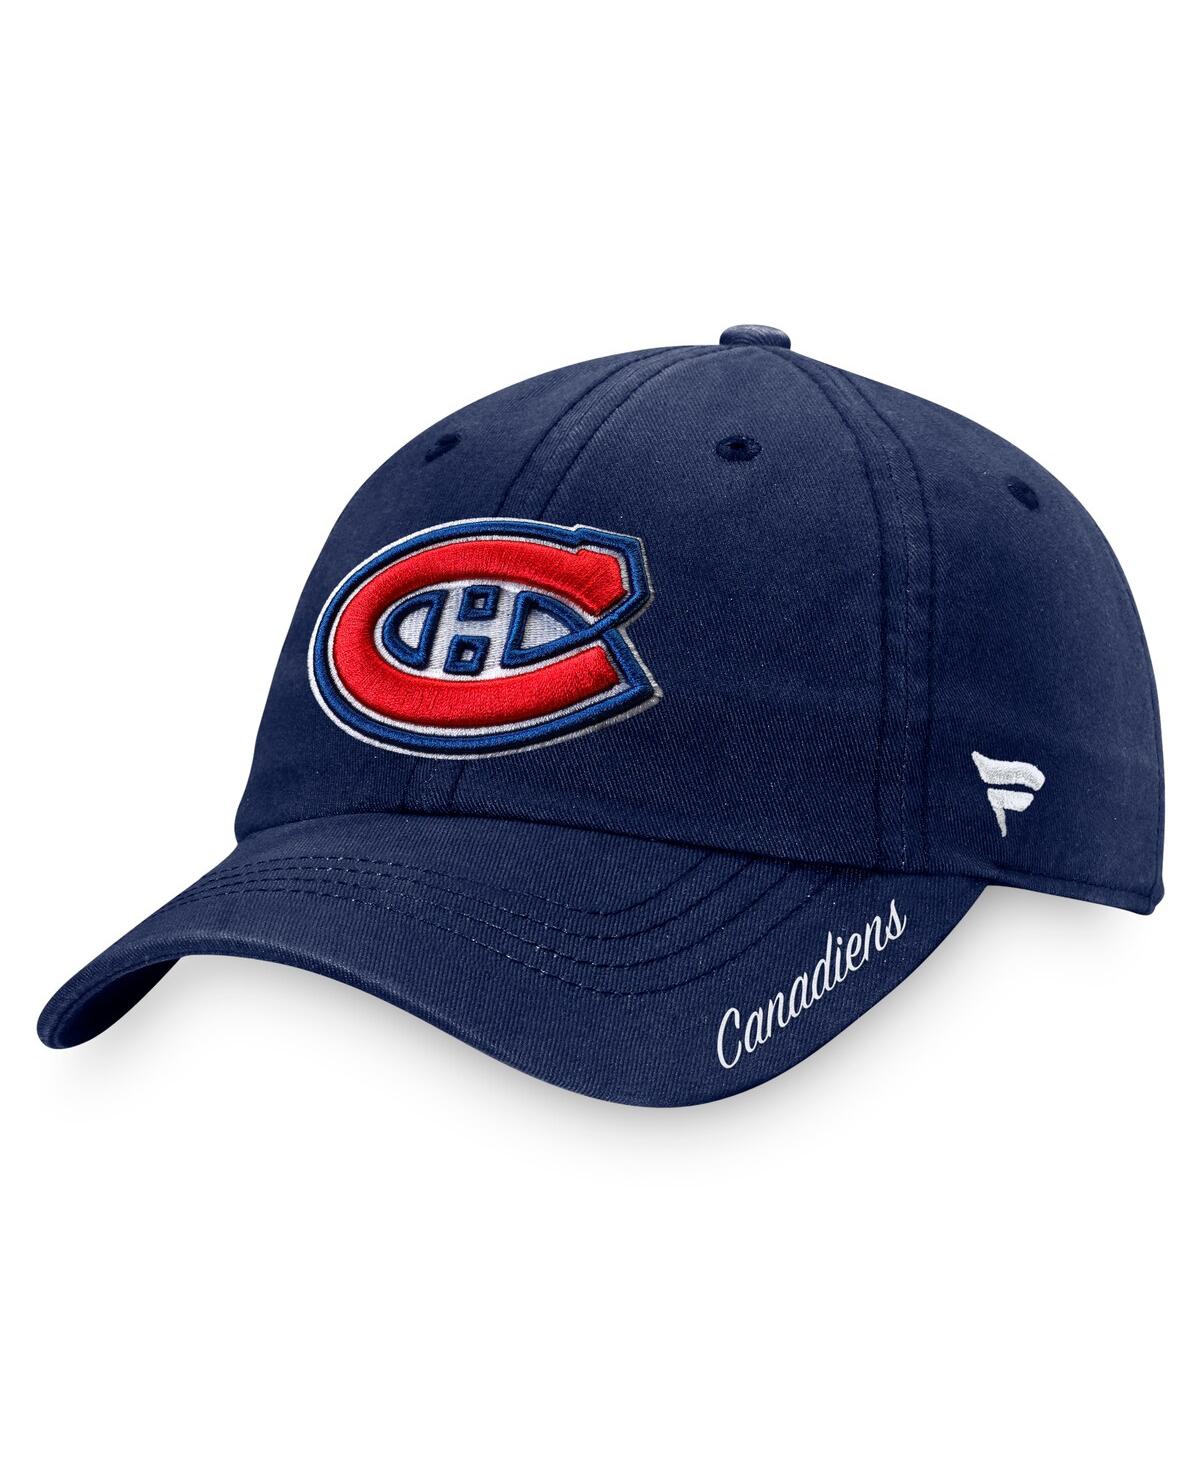 Women's Fanatics Navy Montreal Canadiens Primary Logo Adjustable Hat - Navy